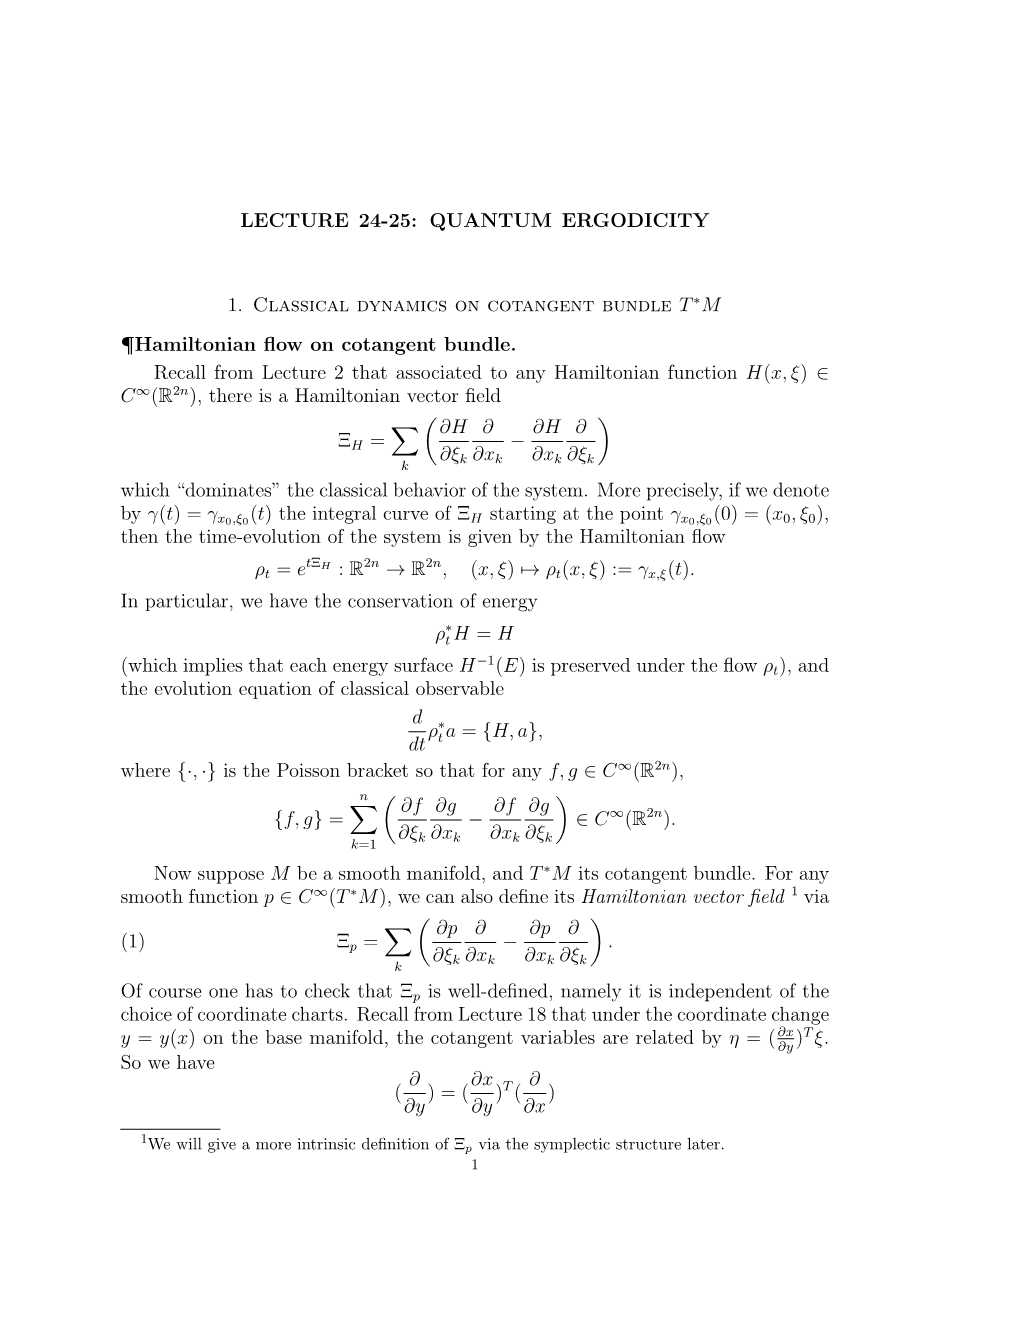 LECTURE 24-25: QUANTUM ERGODICITY 1. Classical Dynamics